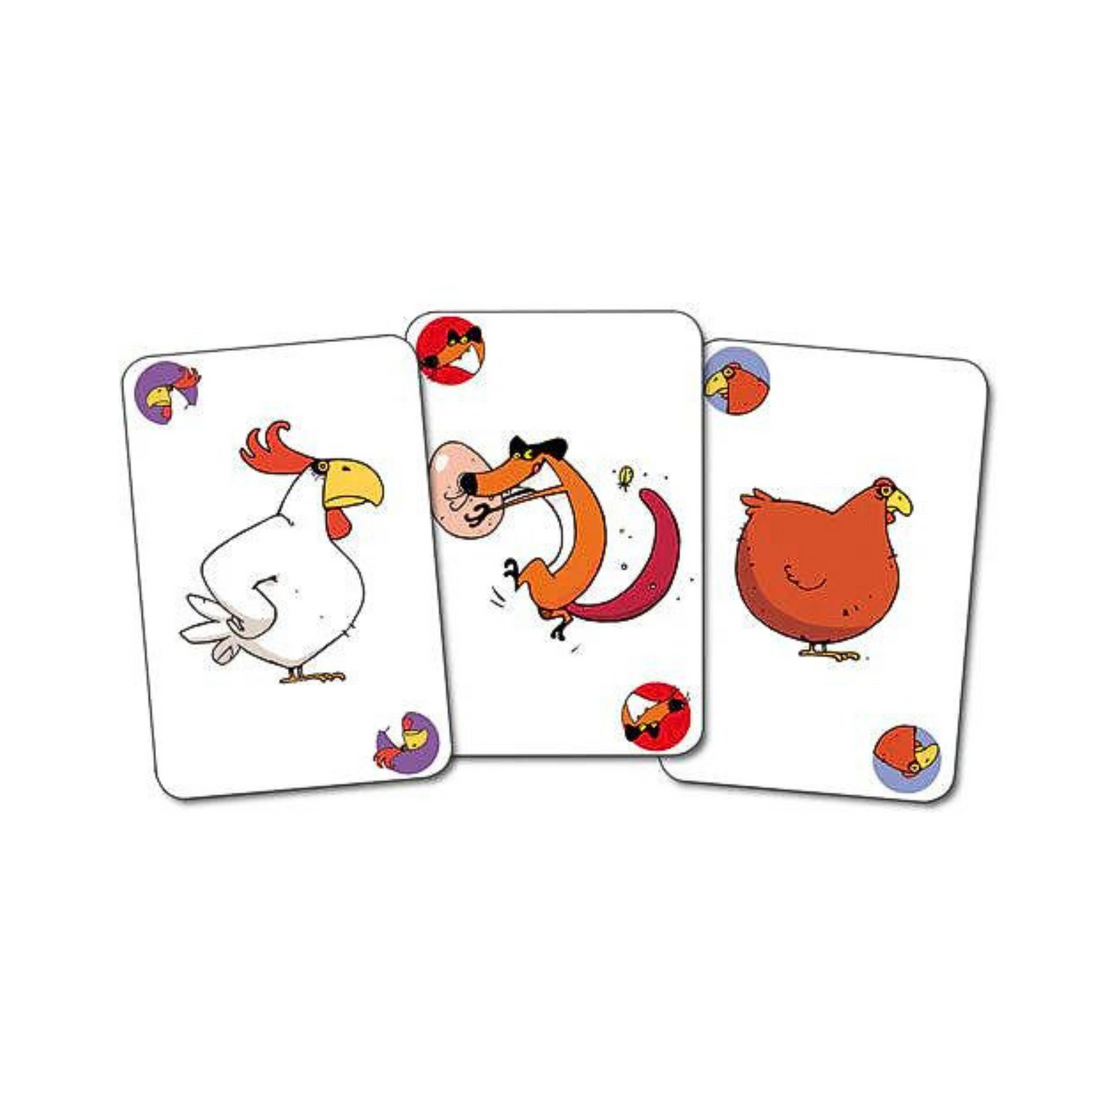 Card game Piou Piou